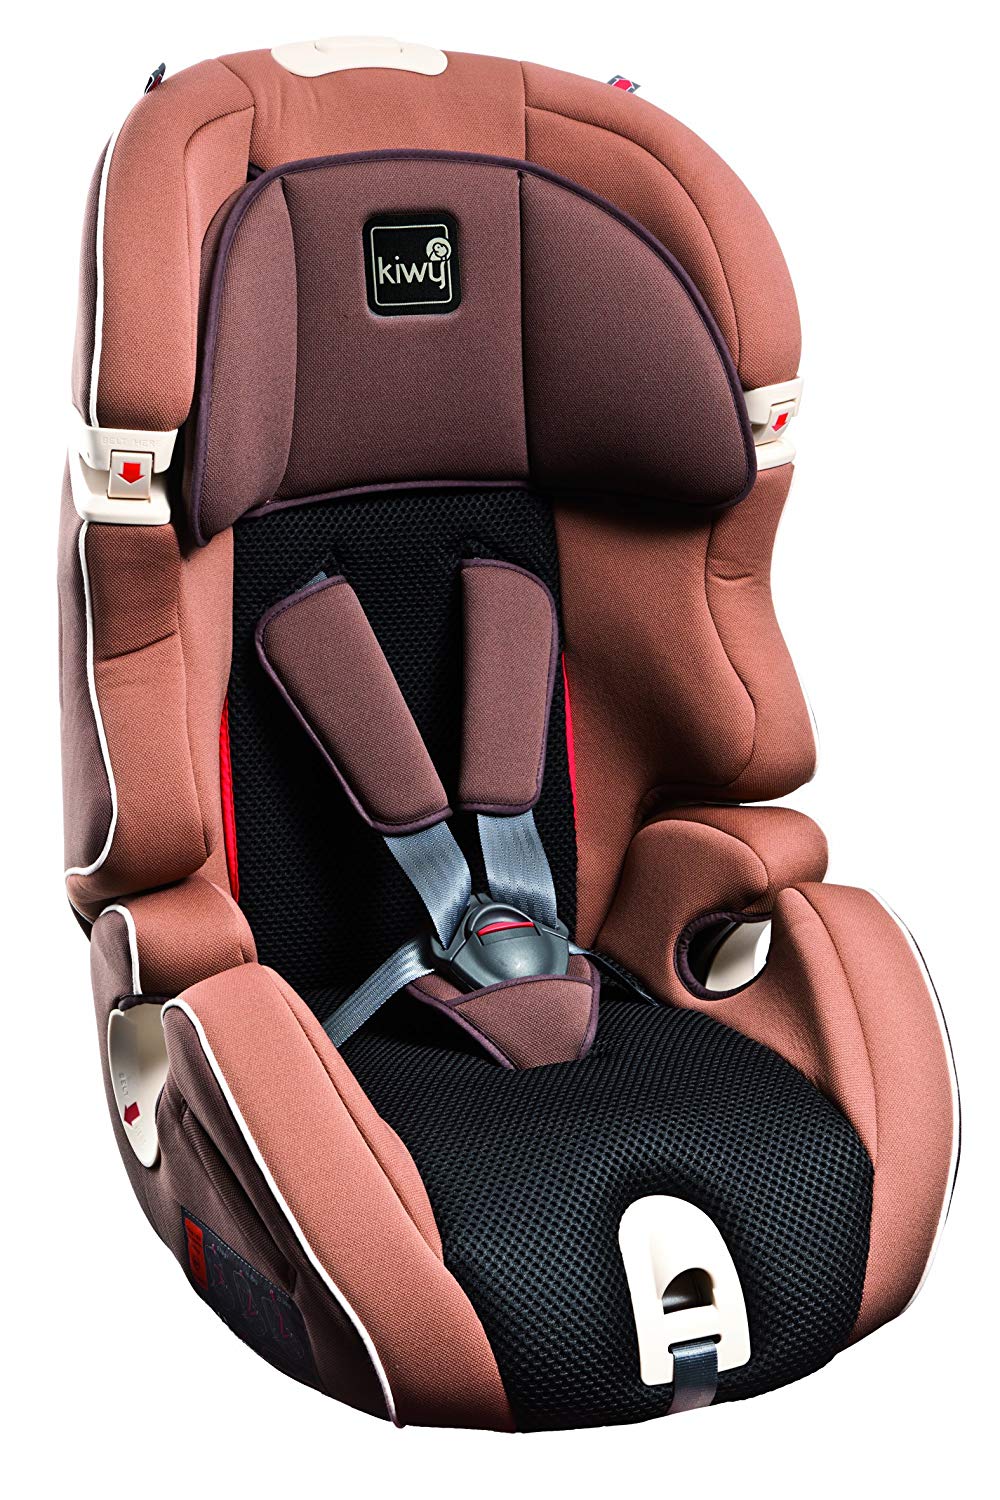 Kiwy Universal S123 13123KW02B Child Car Seat Group 1/2/3 9-36 kg, ECE R44/04 mocha